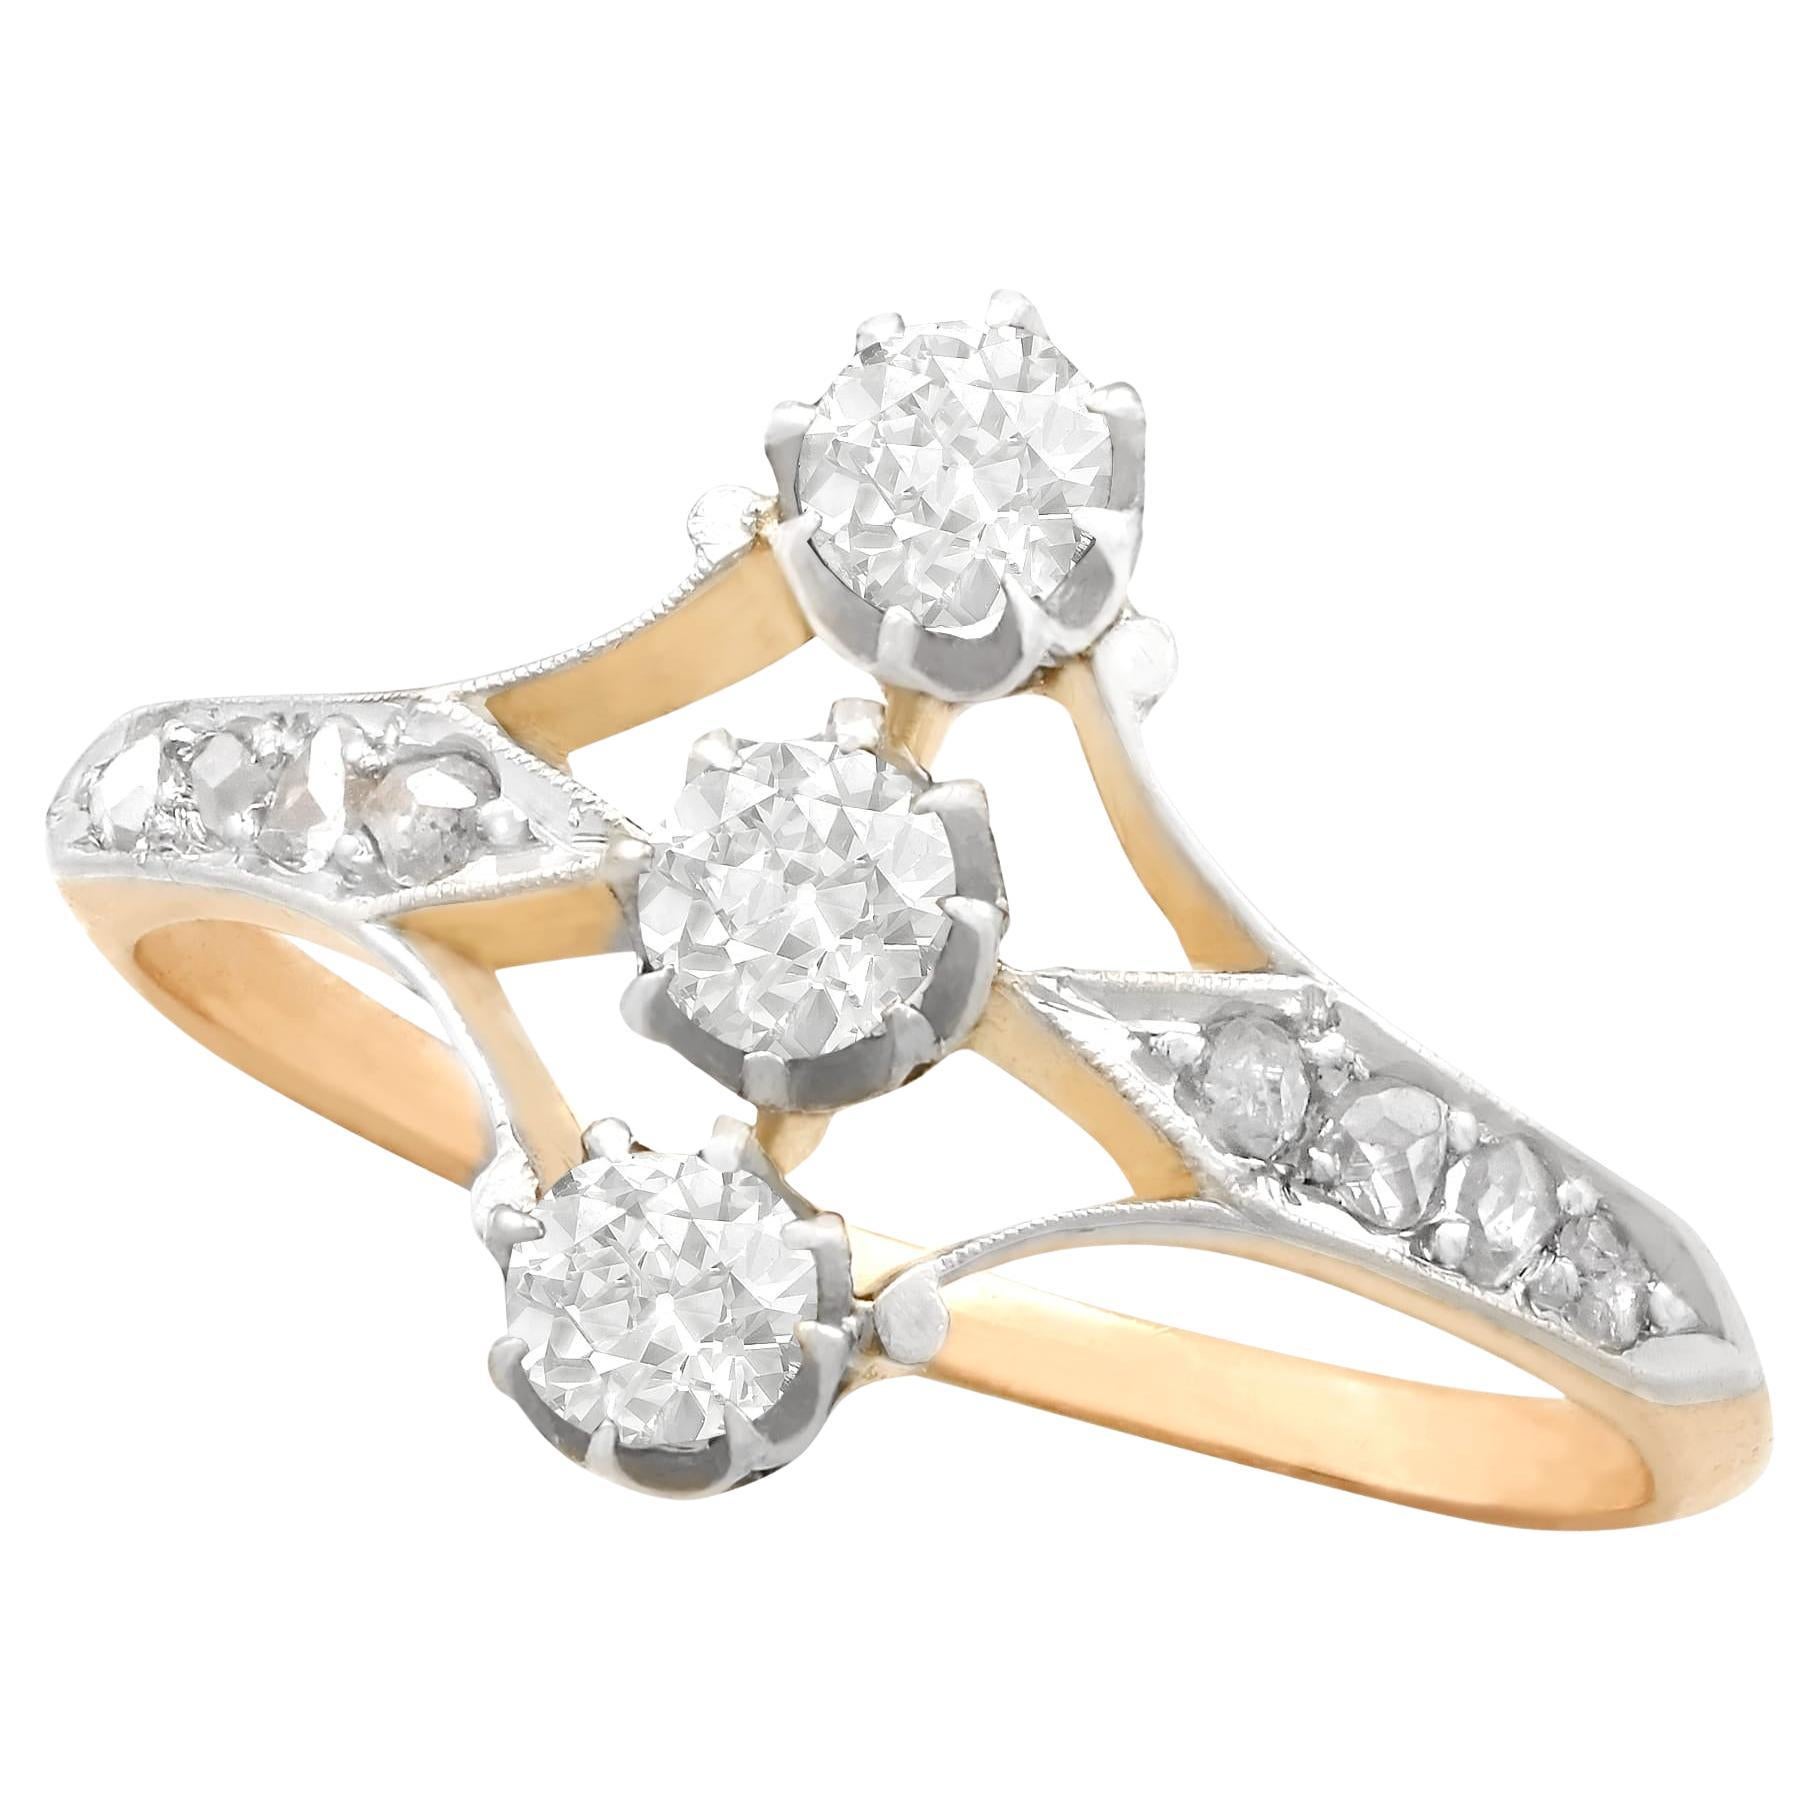 Antiquities 1910s Diamond and Rose Gold Trilogy Ring (Bague trilogie en or rose et diamant)